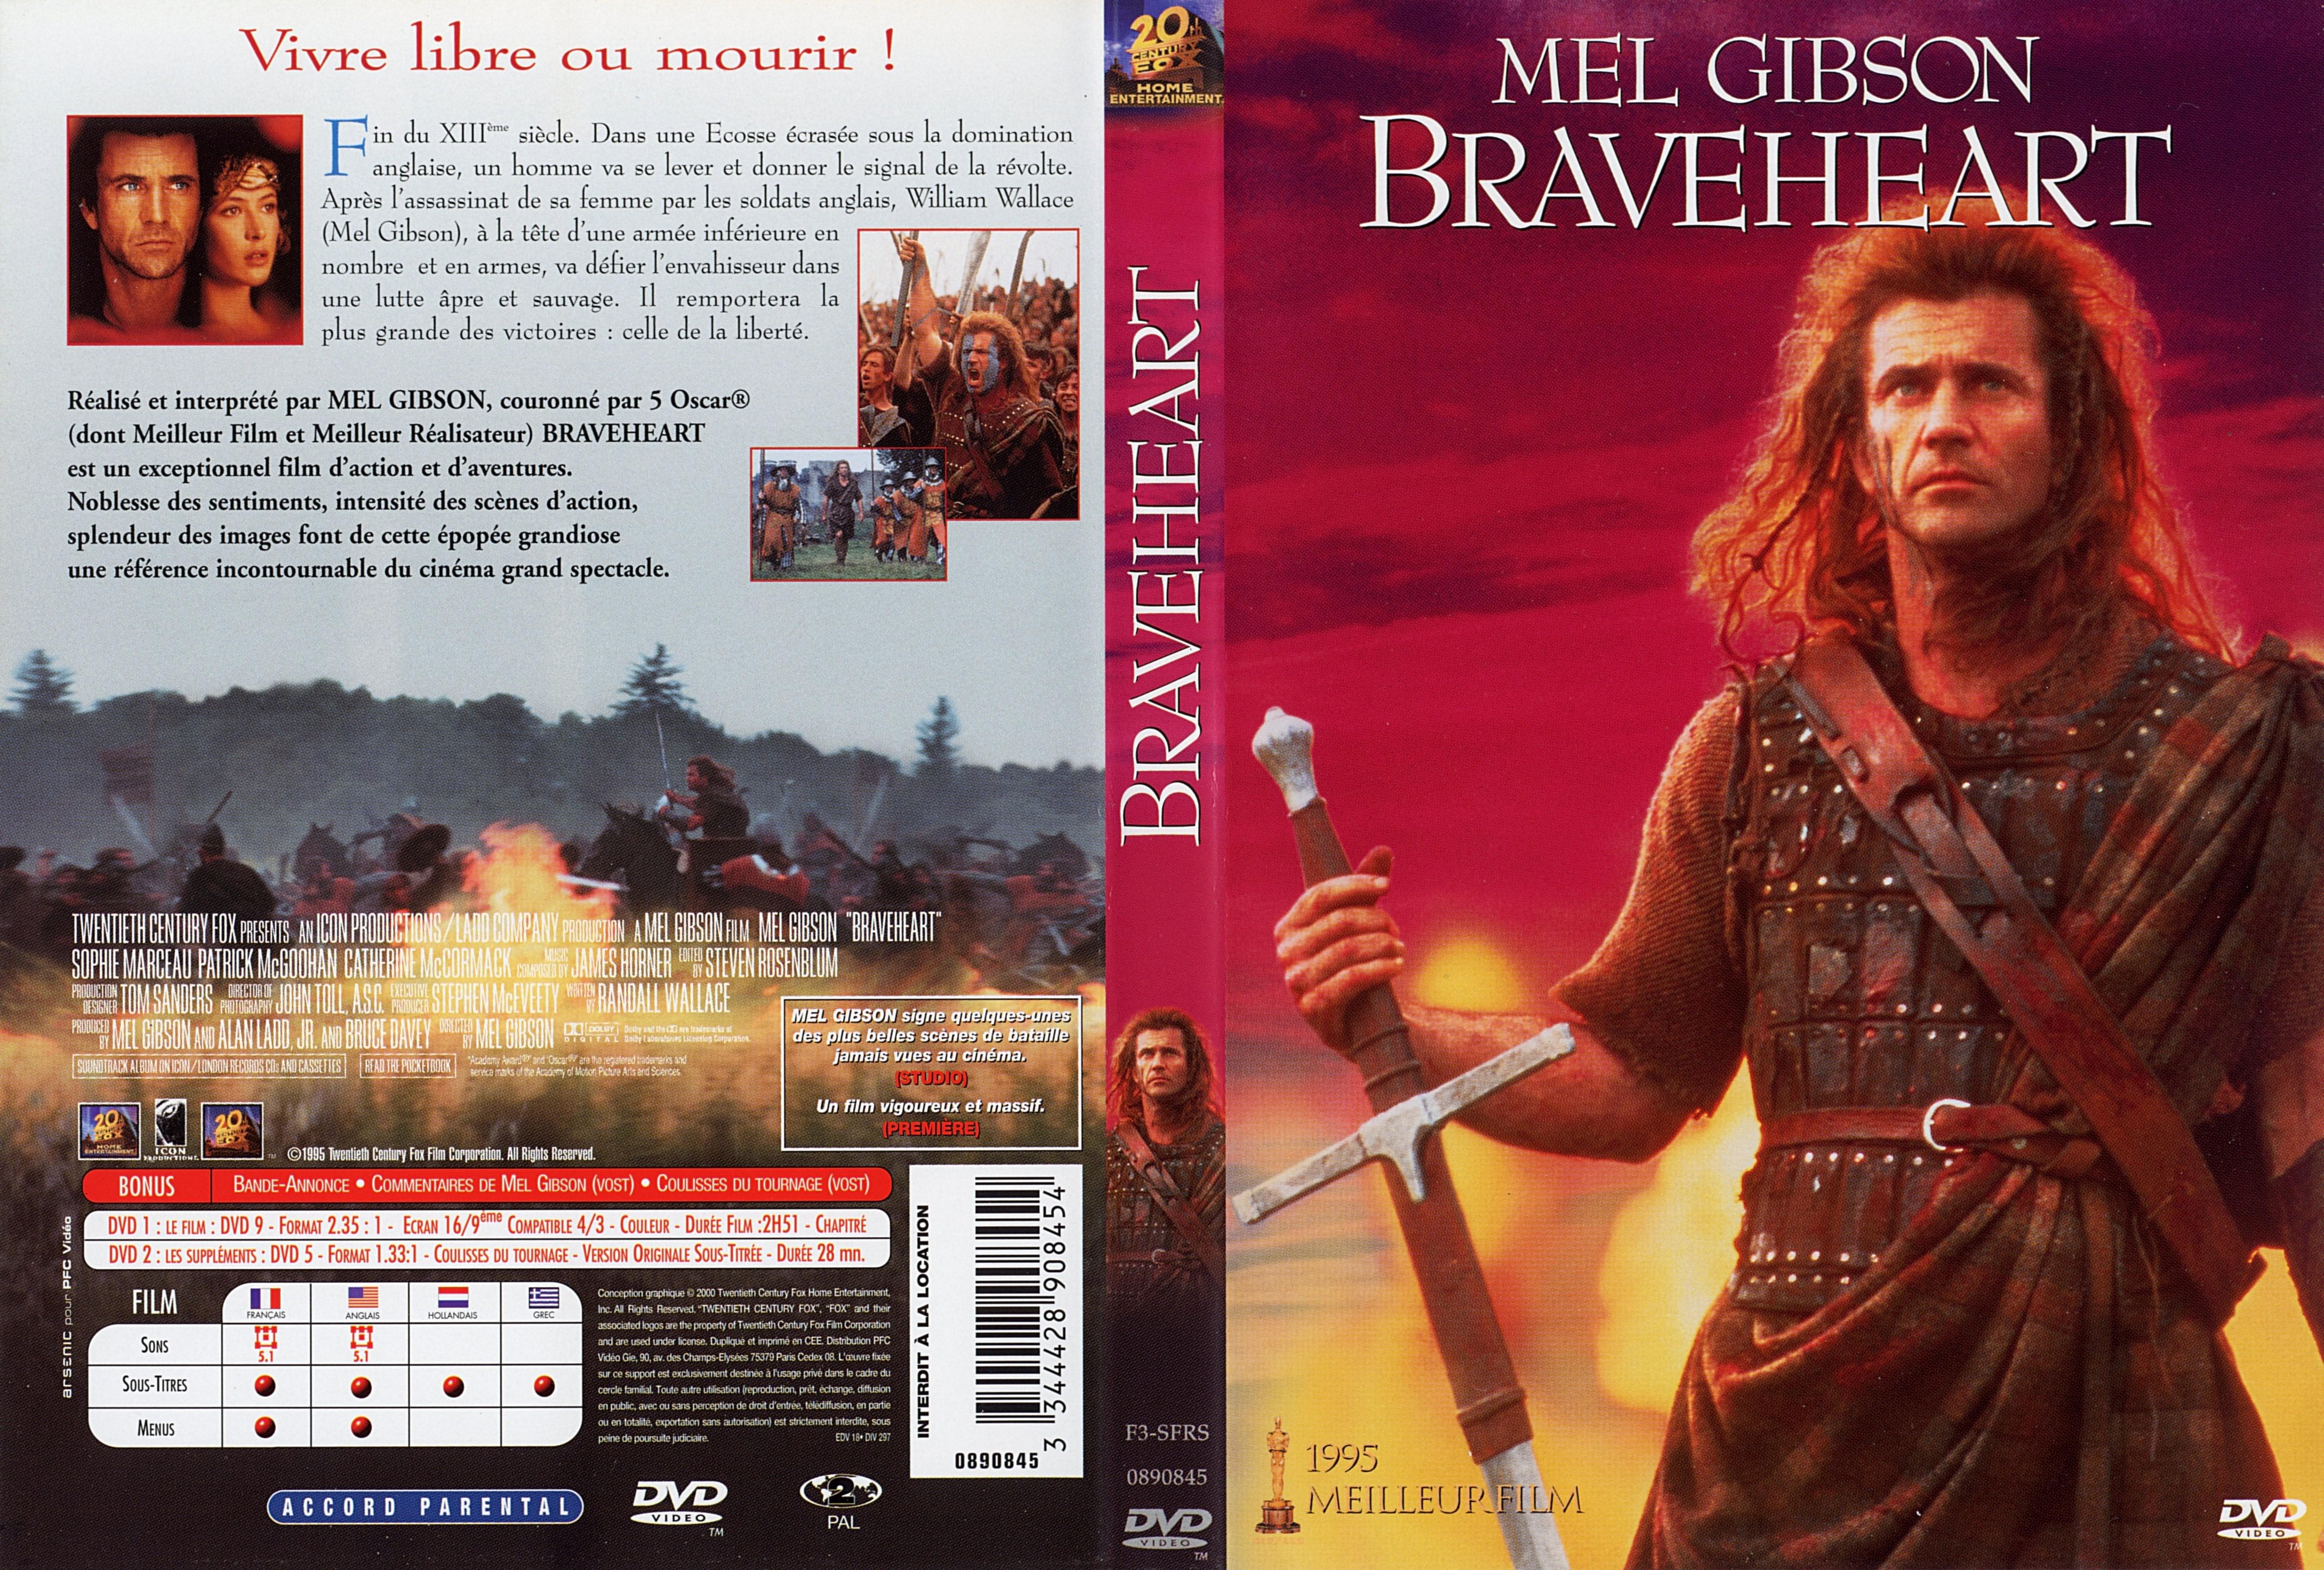 Jaquette DVD Braveheart